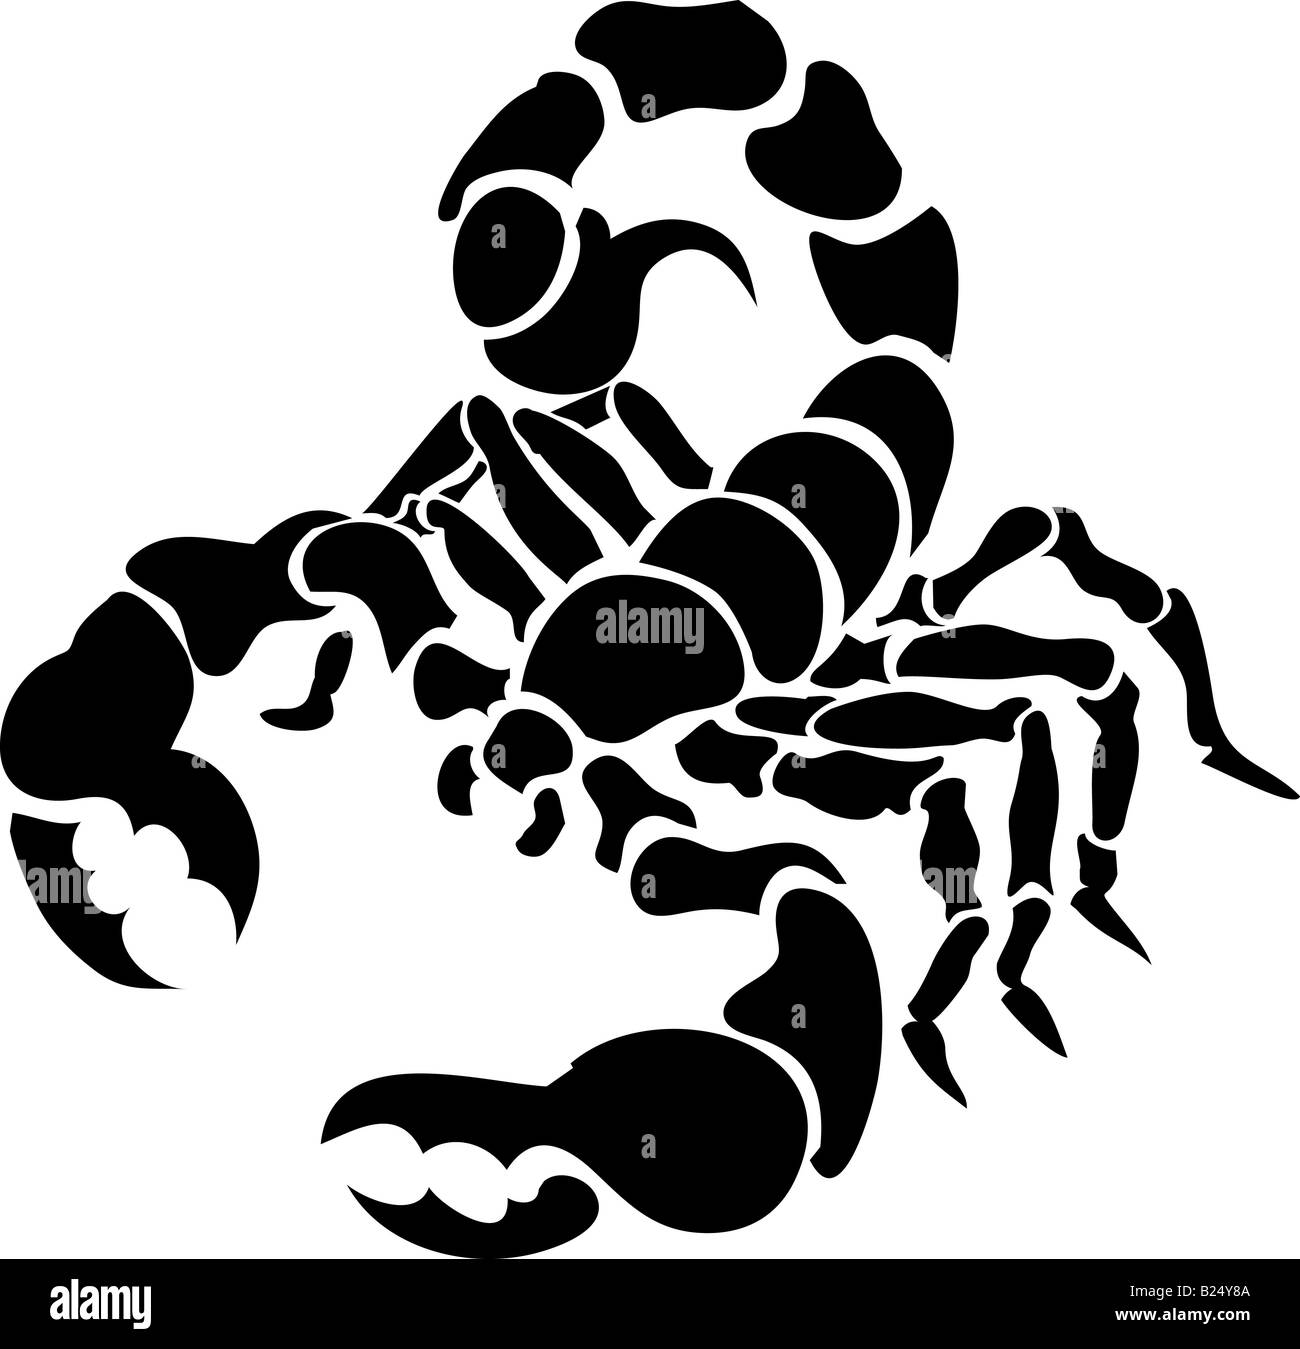 Scorpion. Monochrome illustration of a stylised scorpion Stock Photo